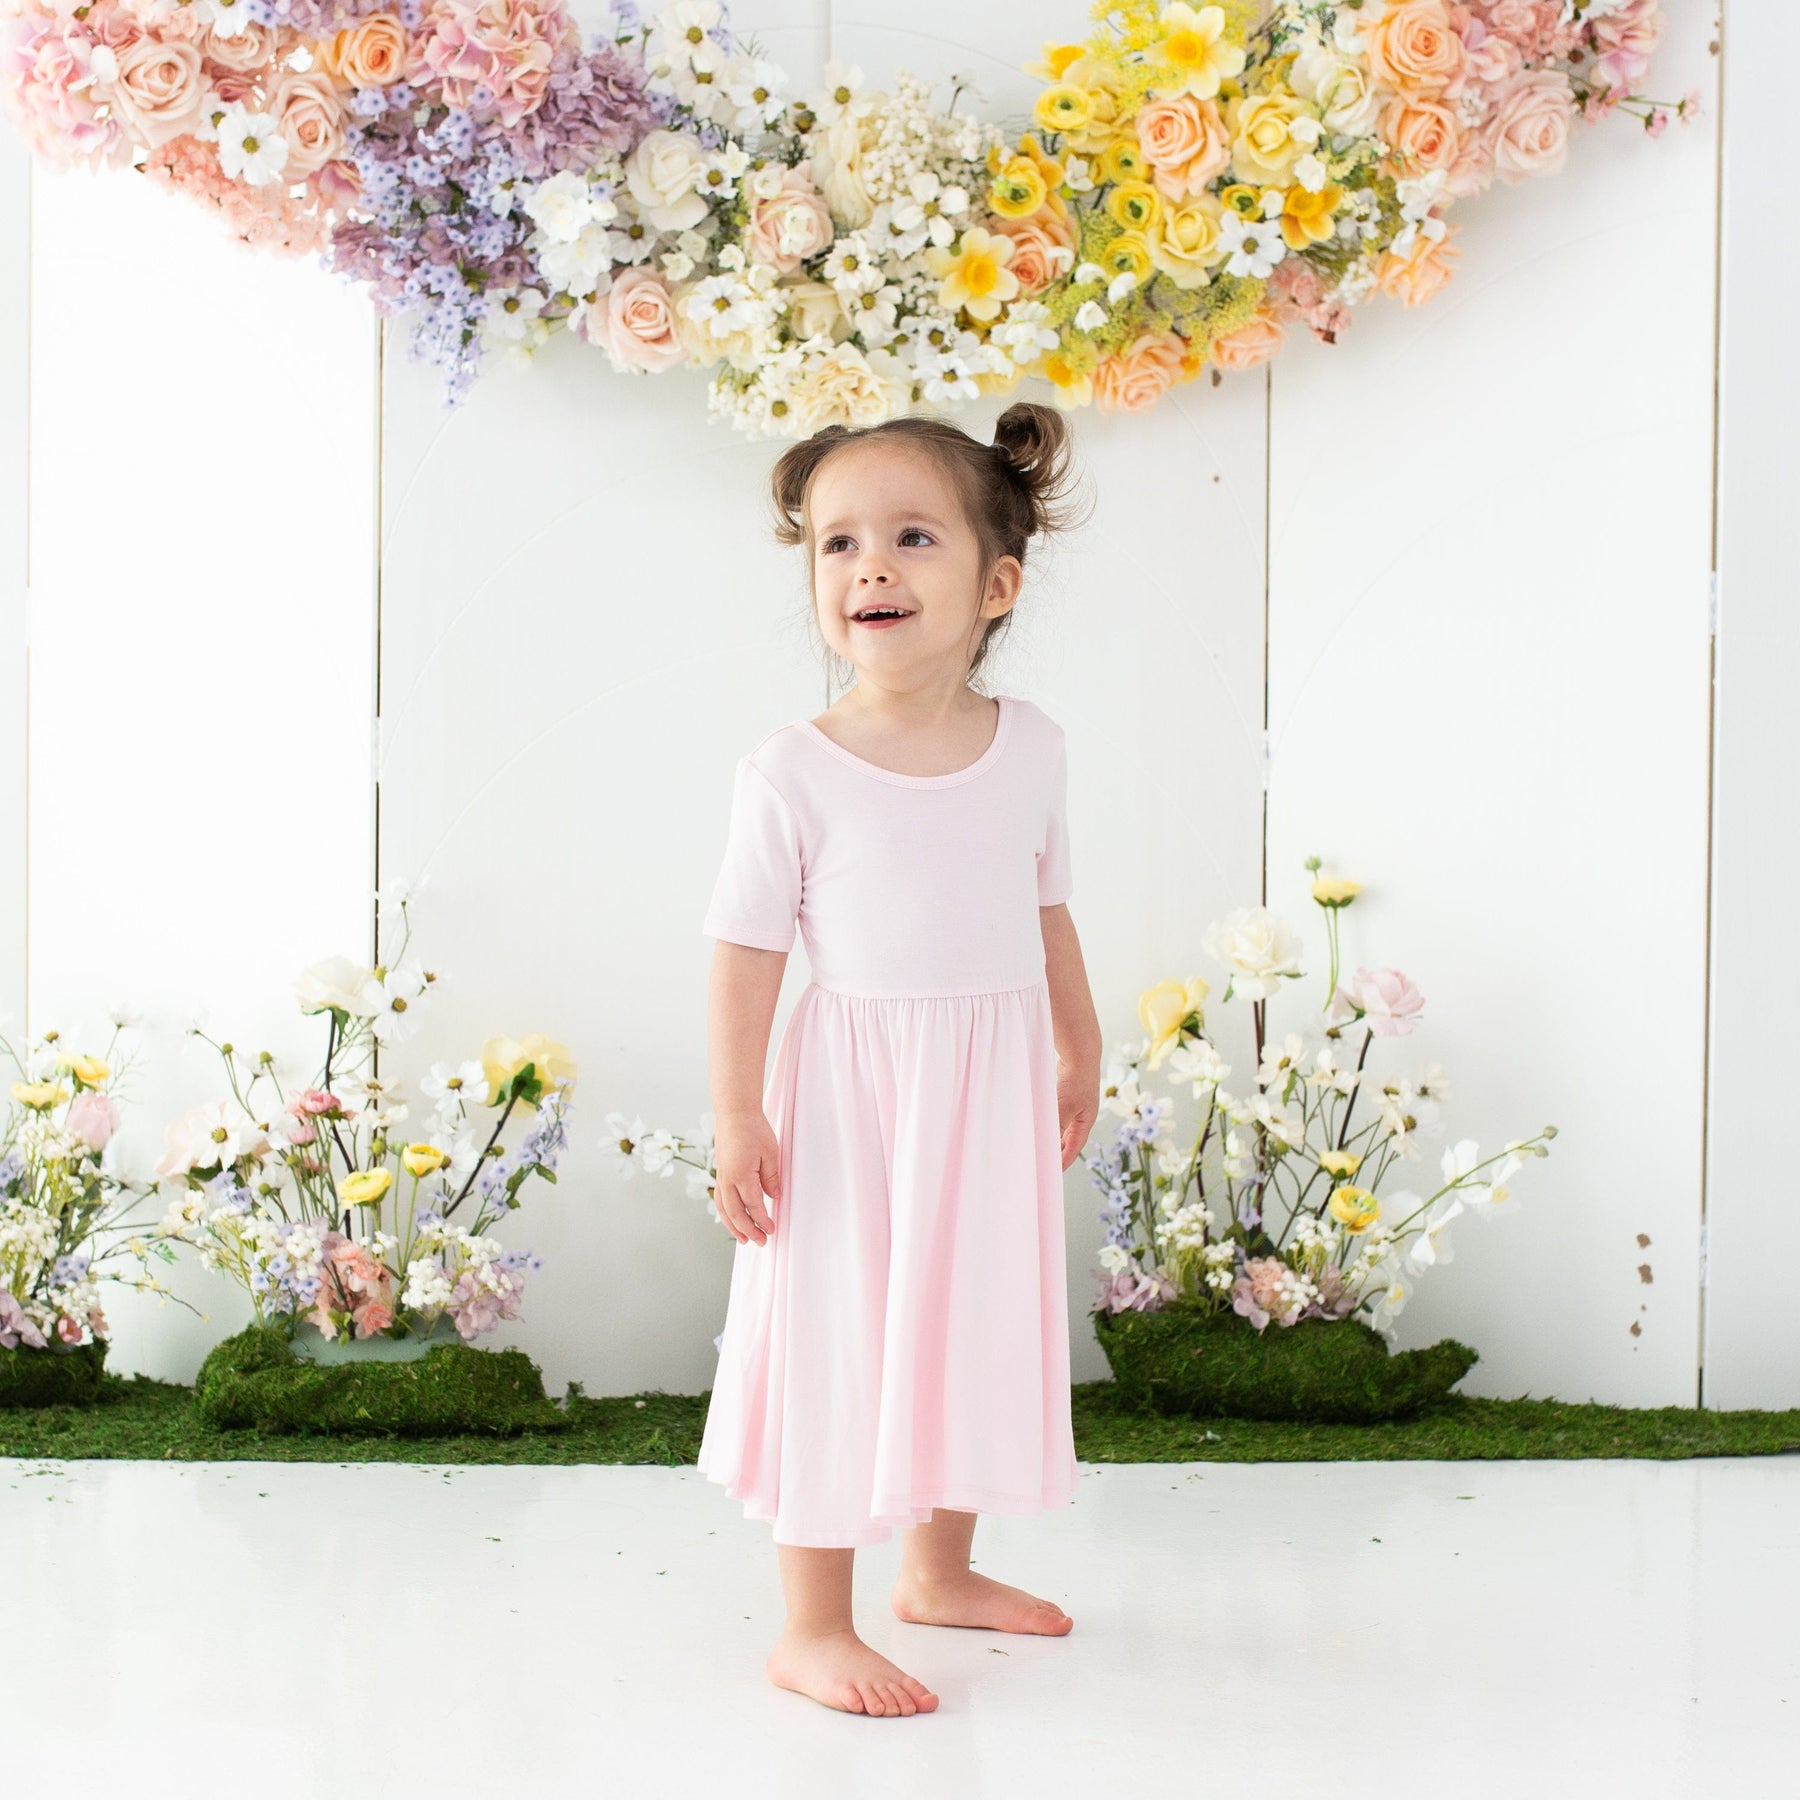 Kyte Baby Toddler Short Sleeve Twirl Dress Twirl Dress in Sakura